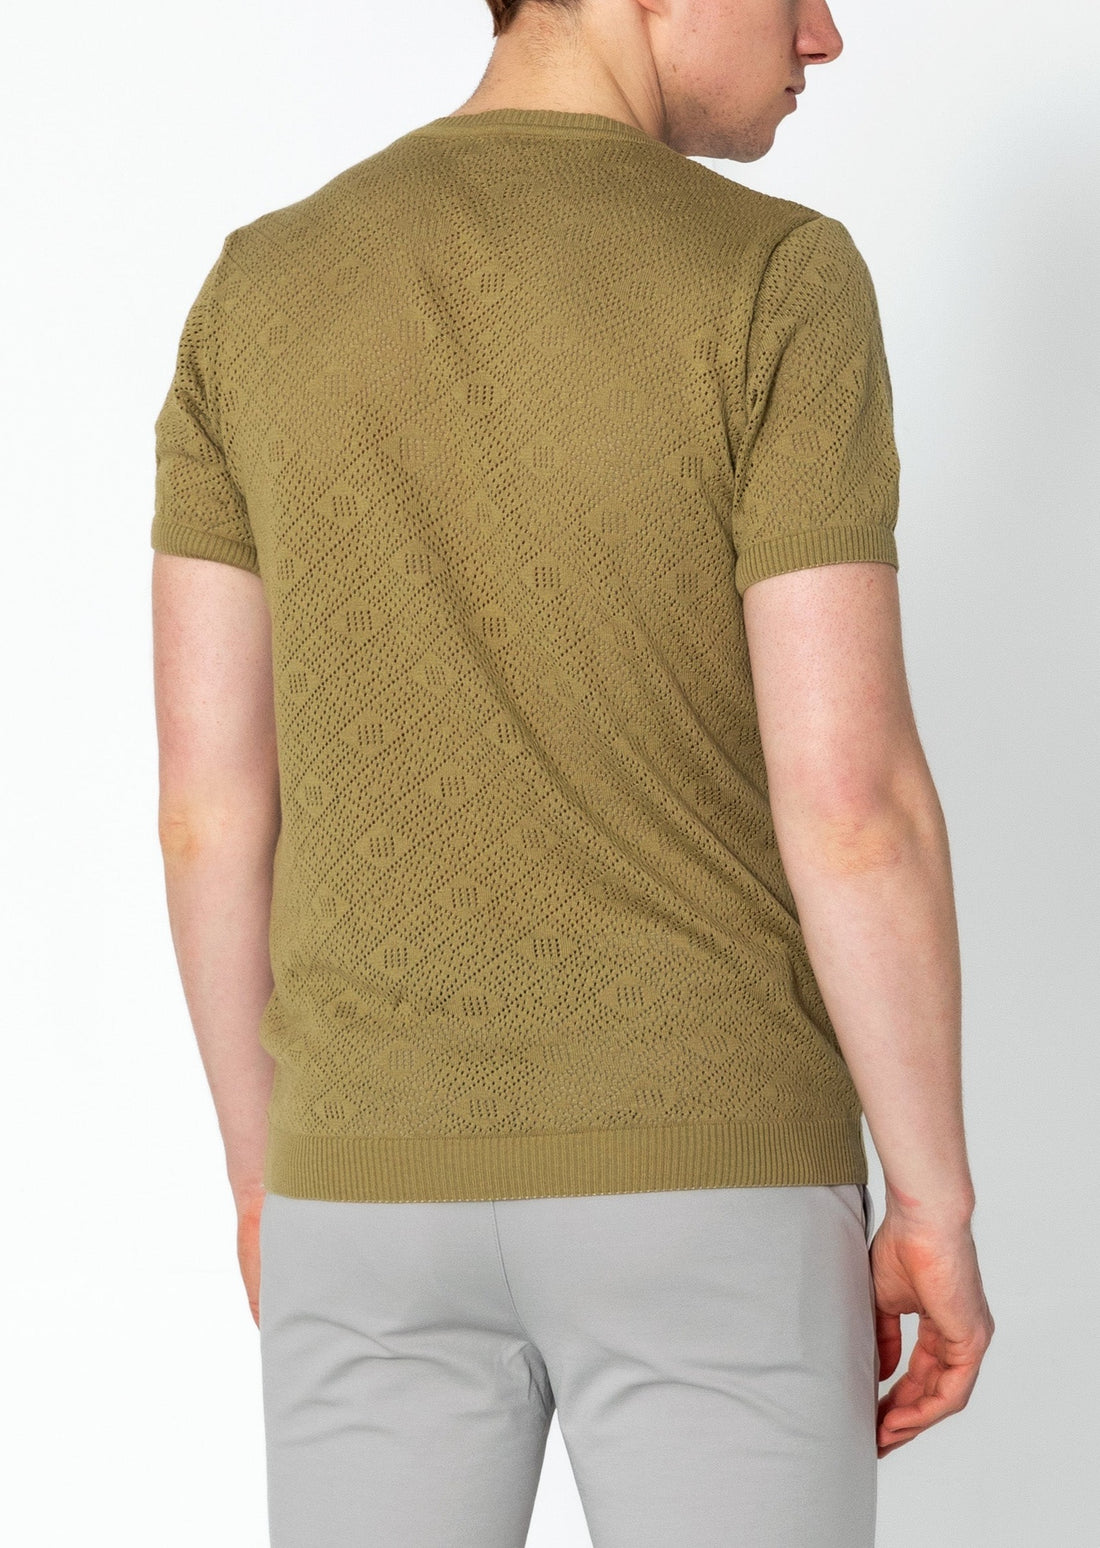 Geometric Crochet Knit Top - Light Green